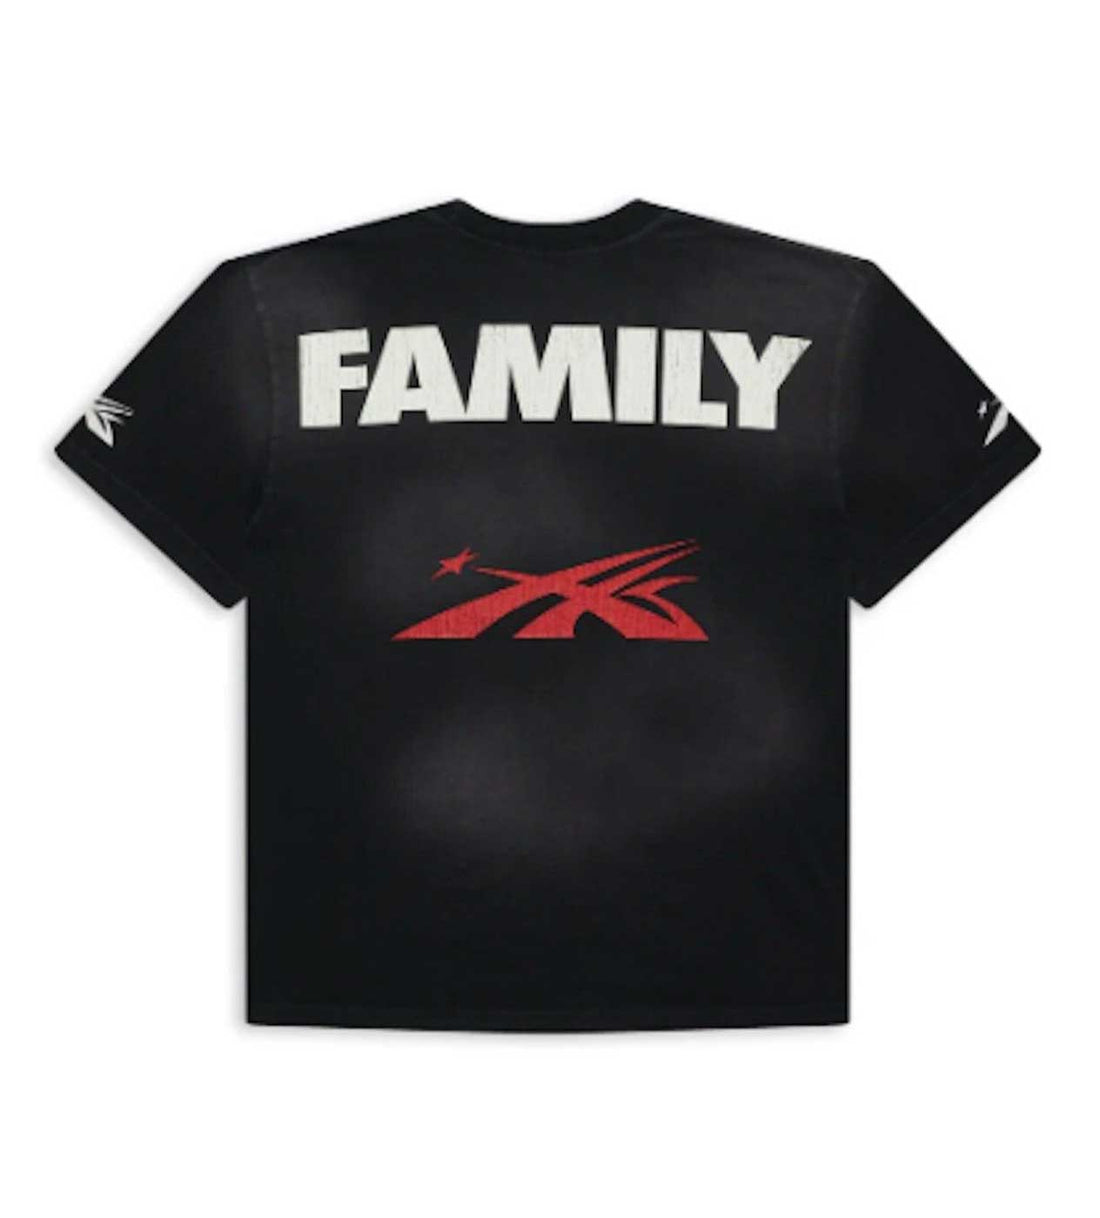 Hellstar Sports Family Tee Black Back View